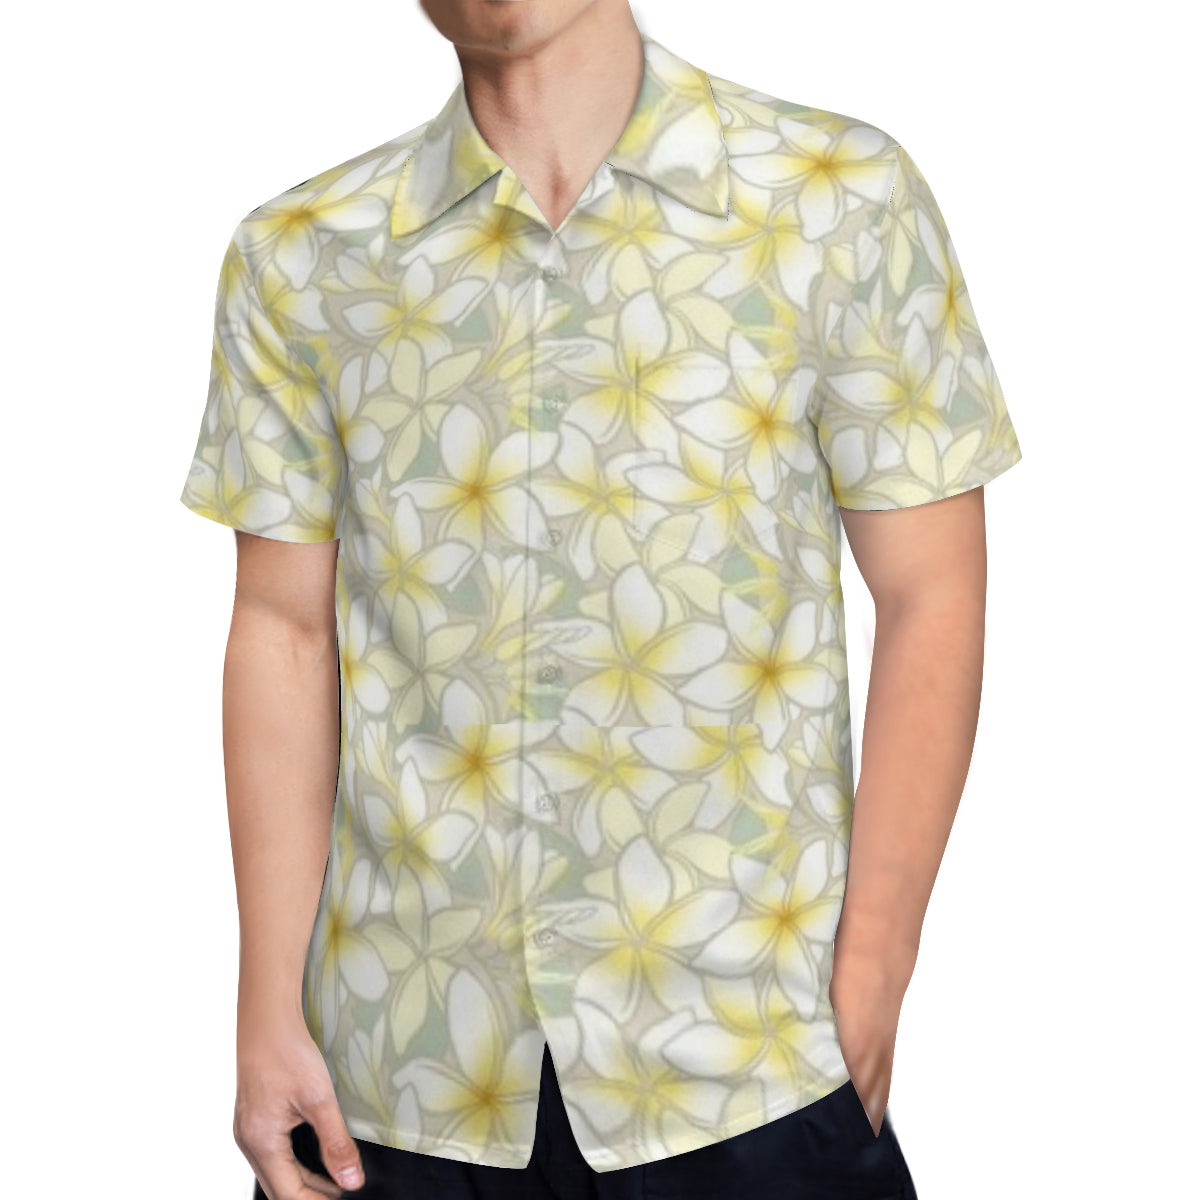 Hawaiian Shirt - Grey and yellow flowers